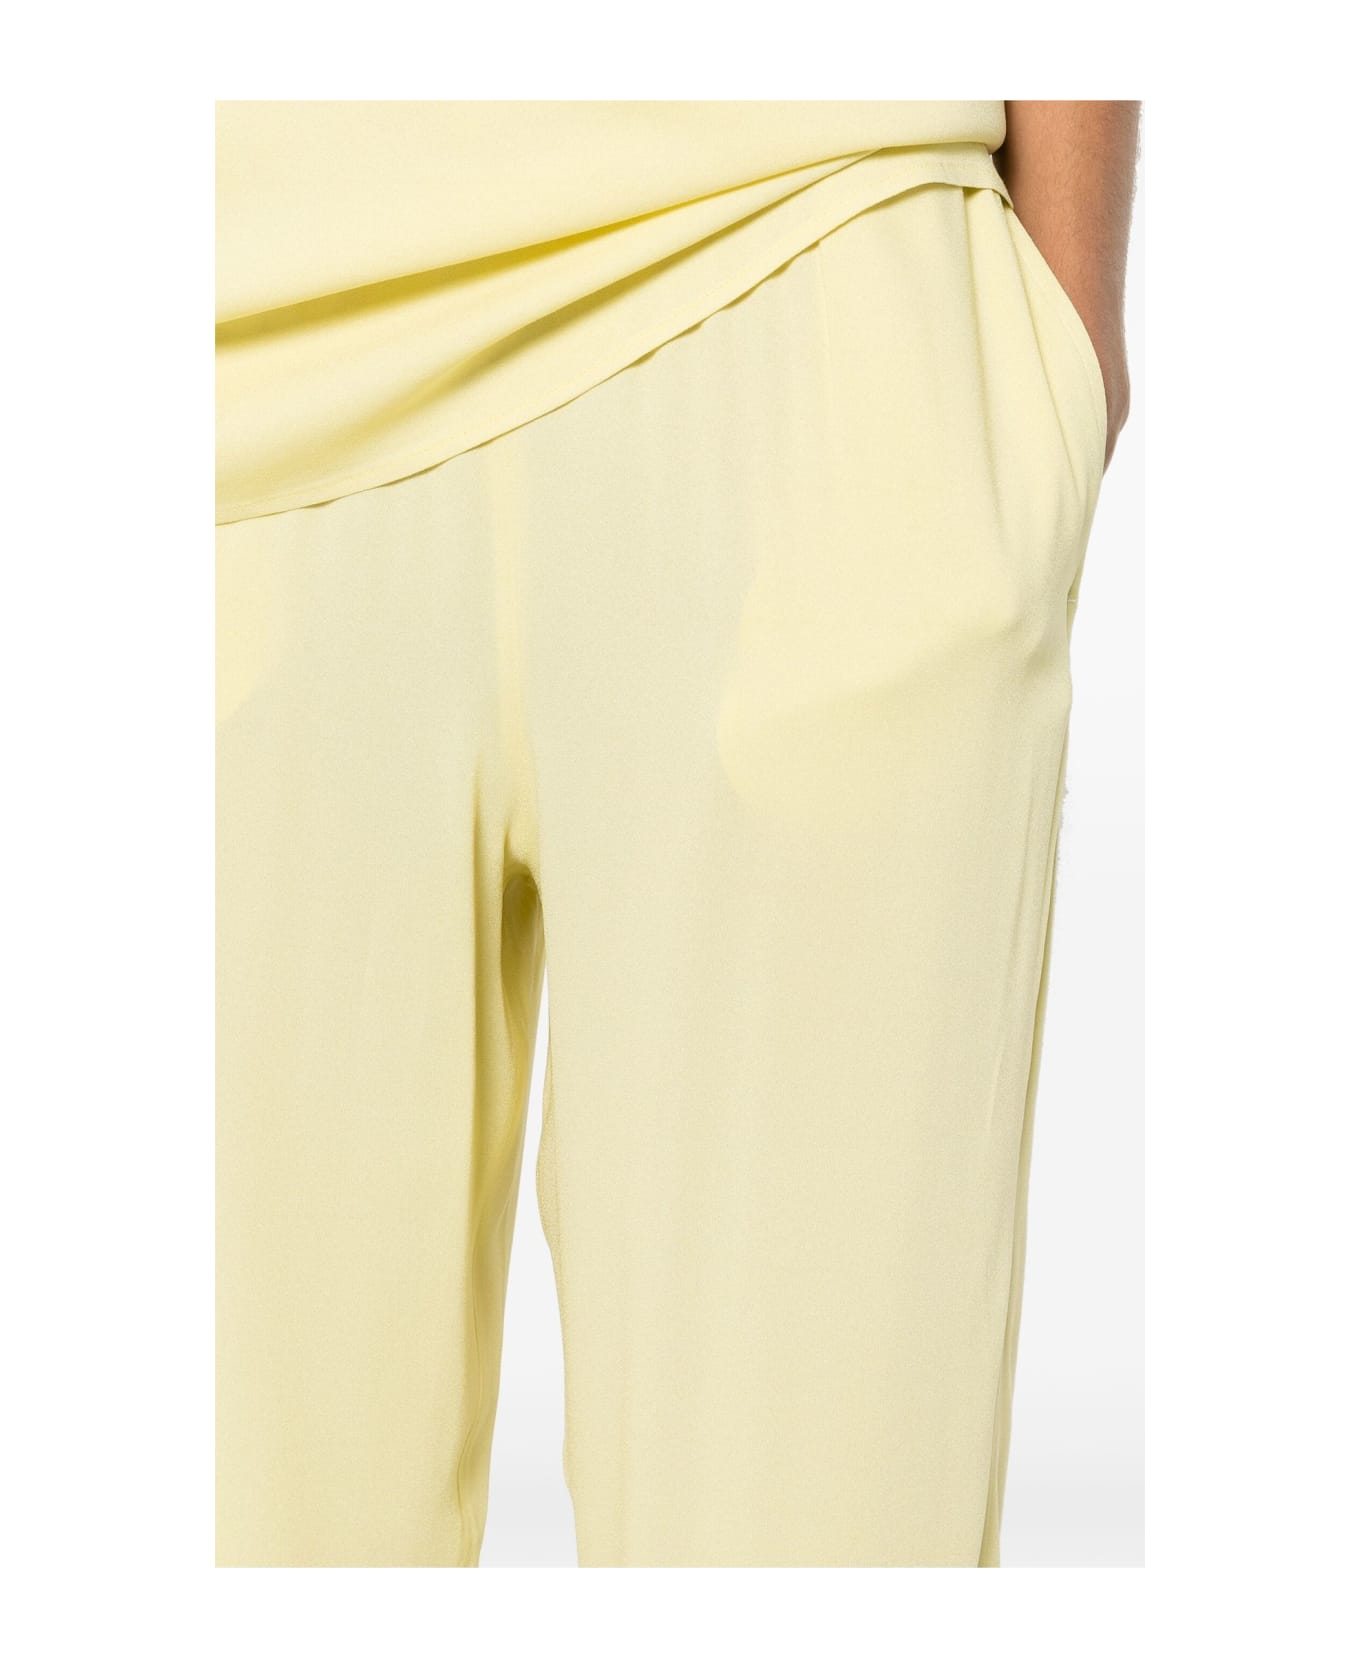 Fabiana Filippi Yellow Viscose Trousers - Yellow